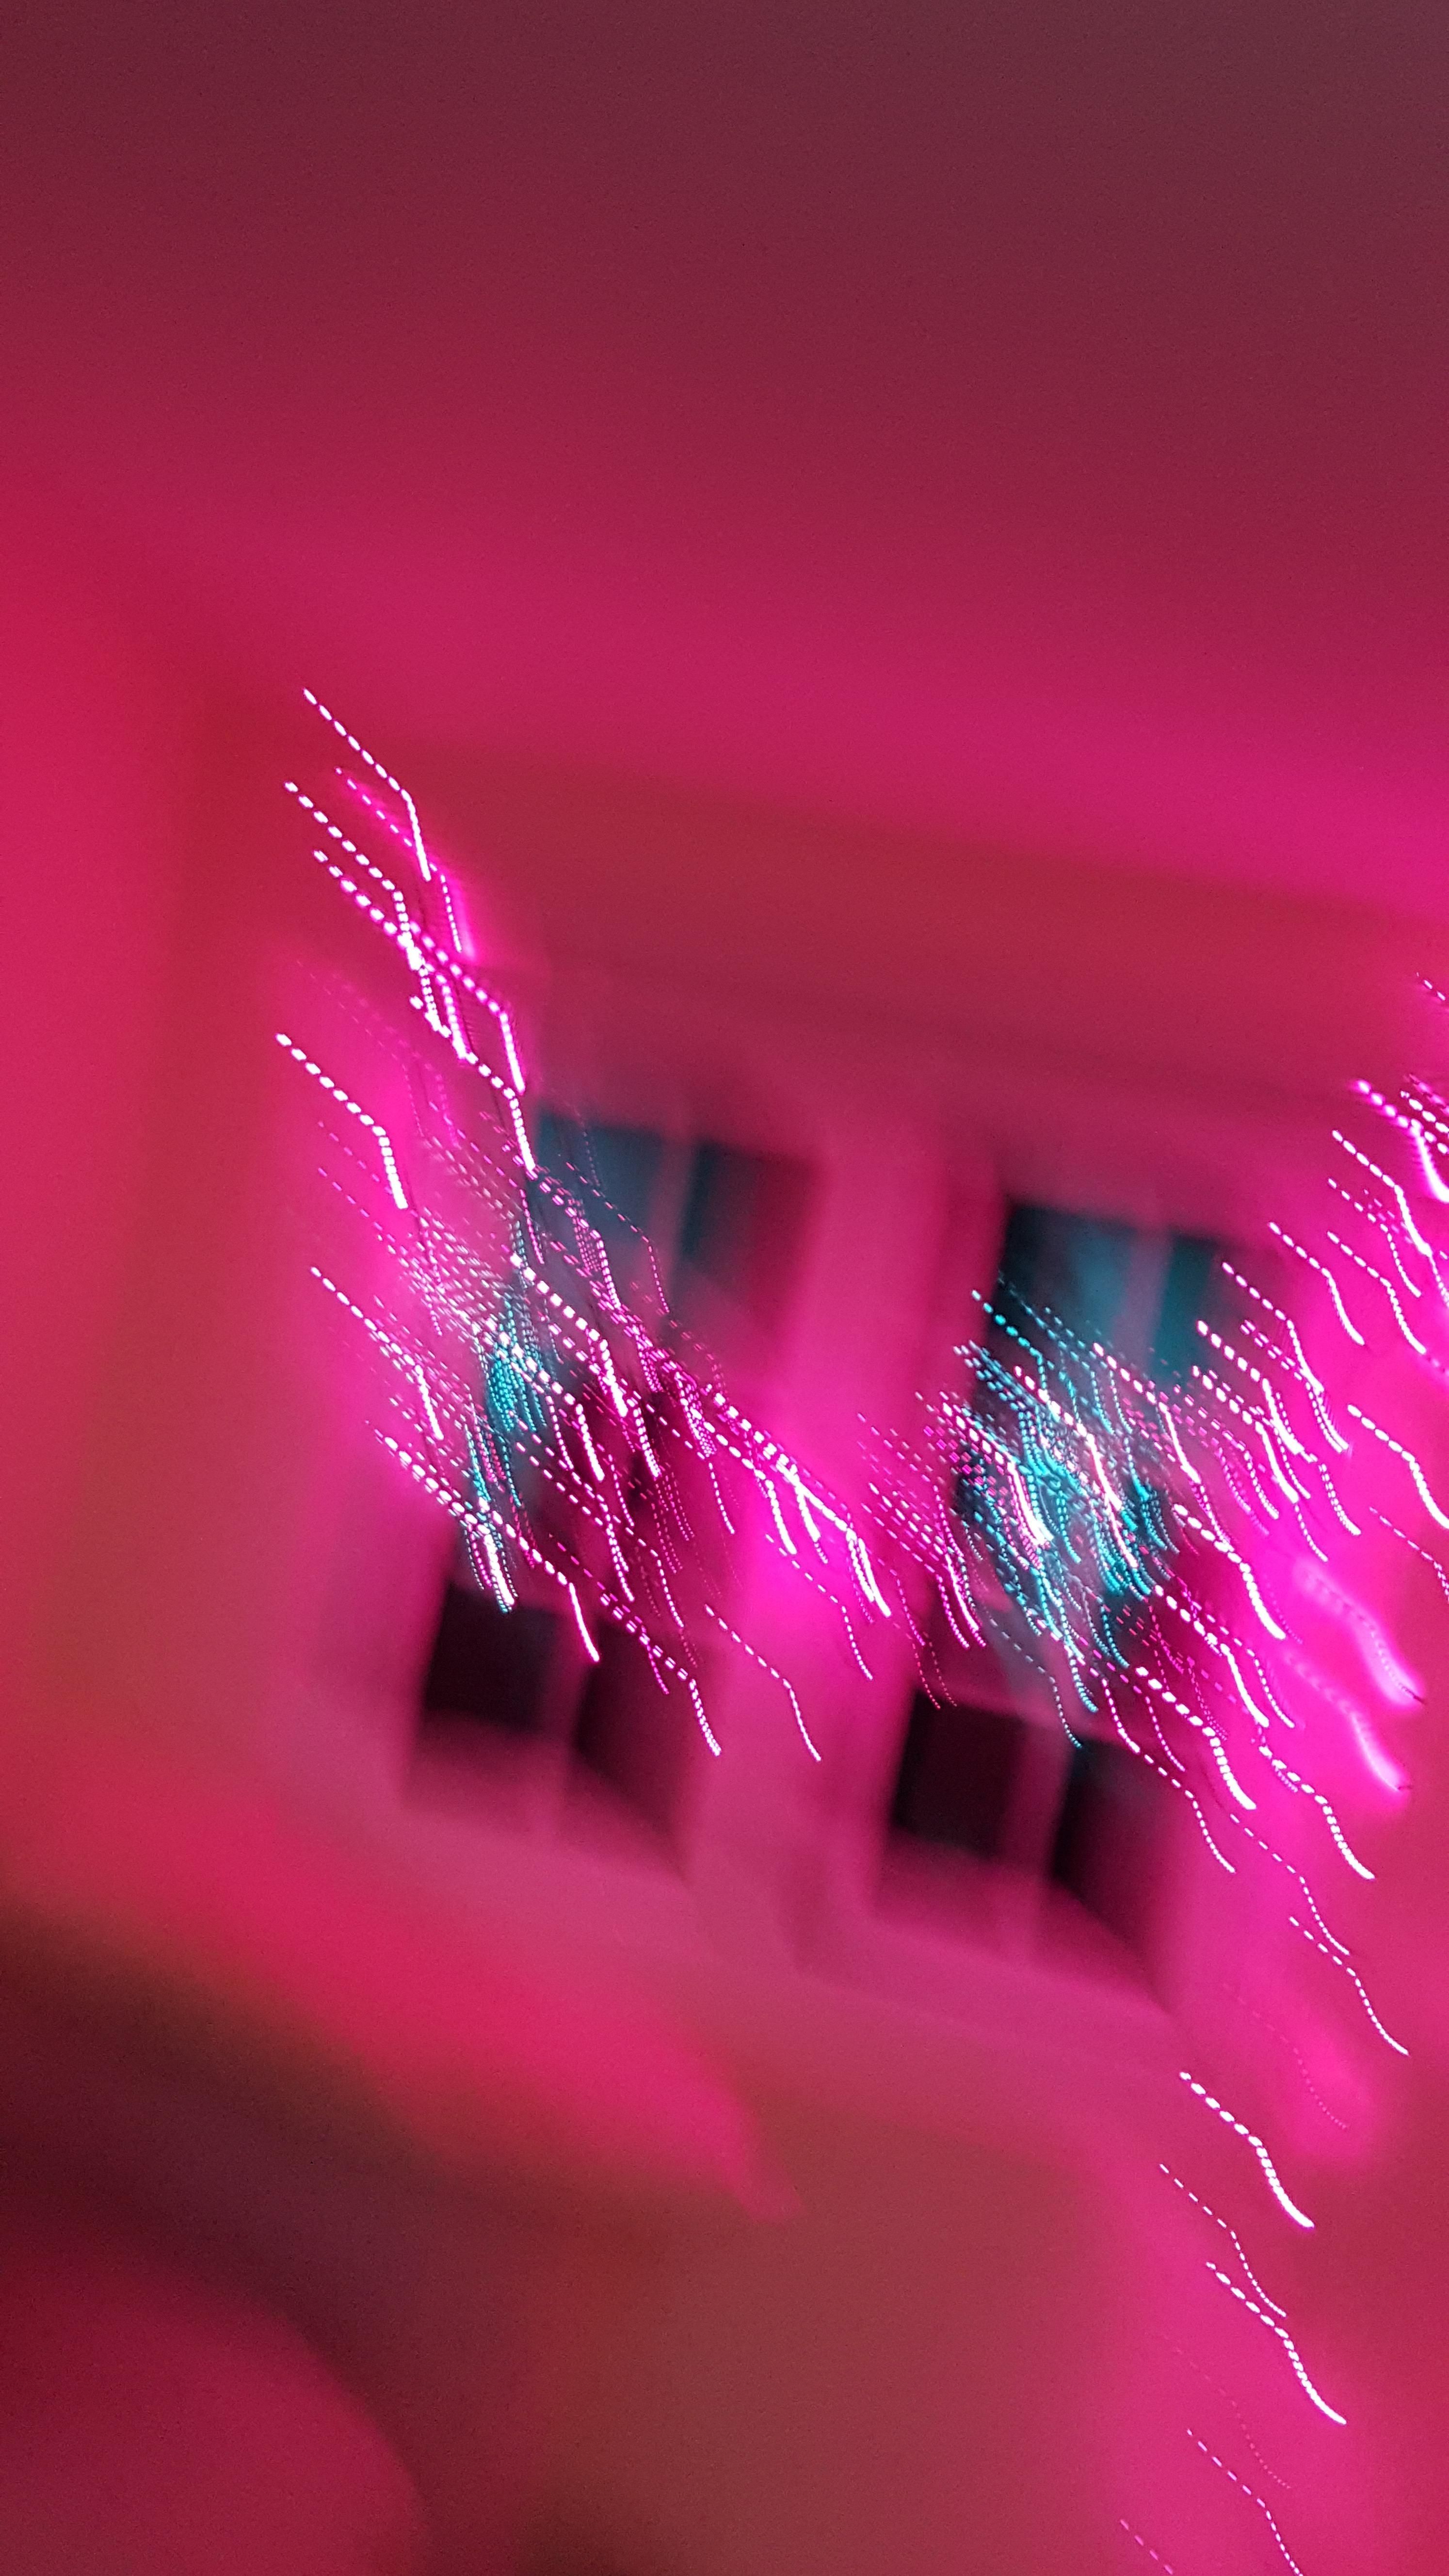 Blurry bedroom fairy lights #vaporwave #glitch #aesthetic